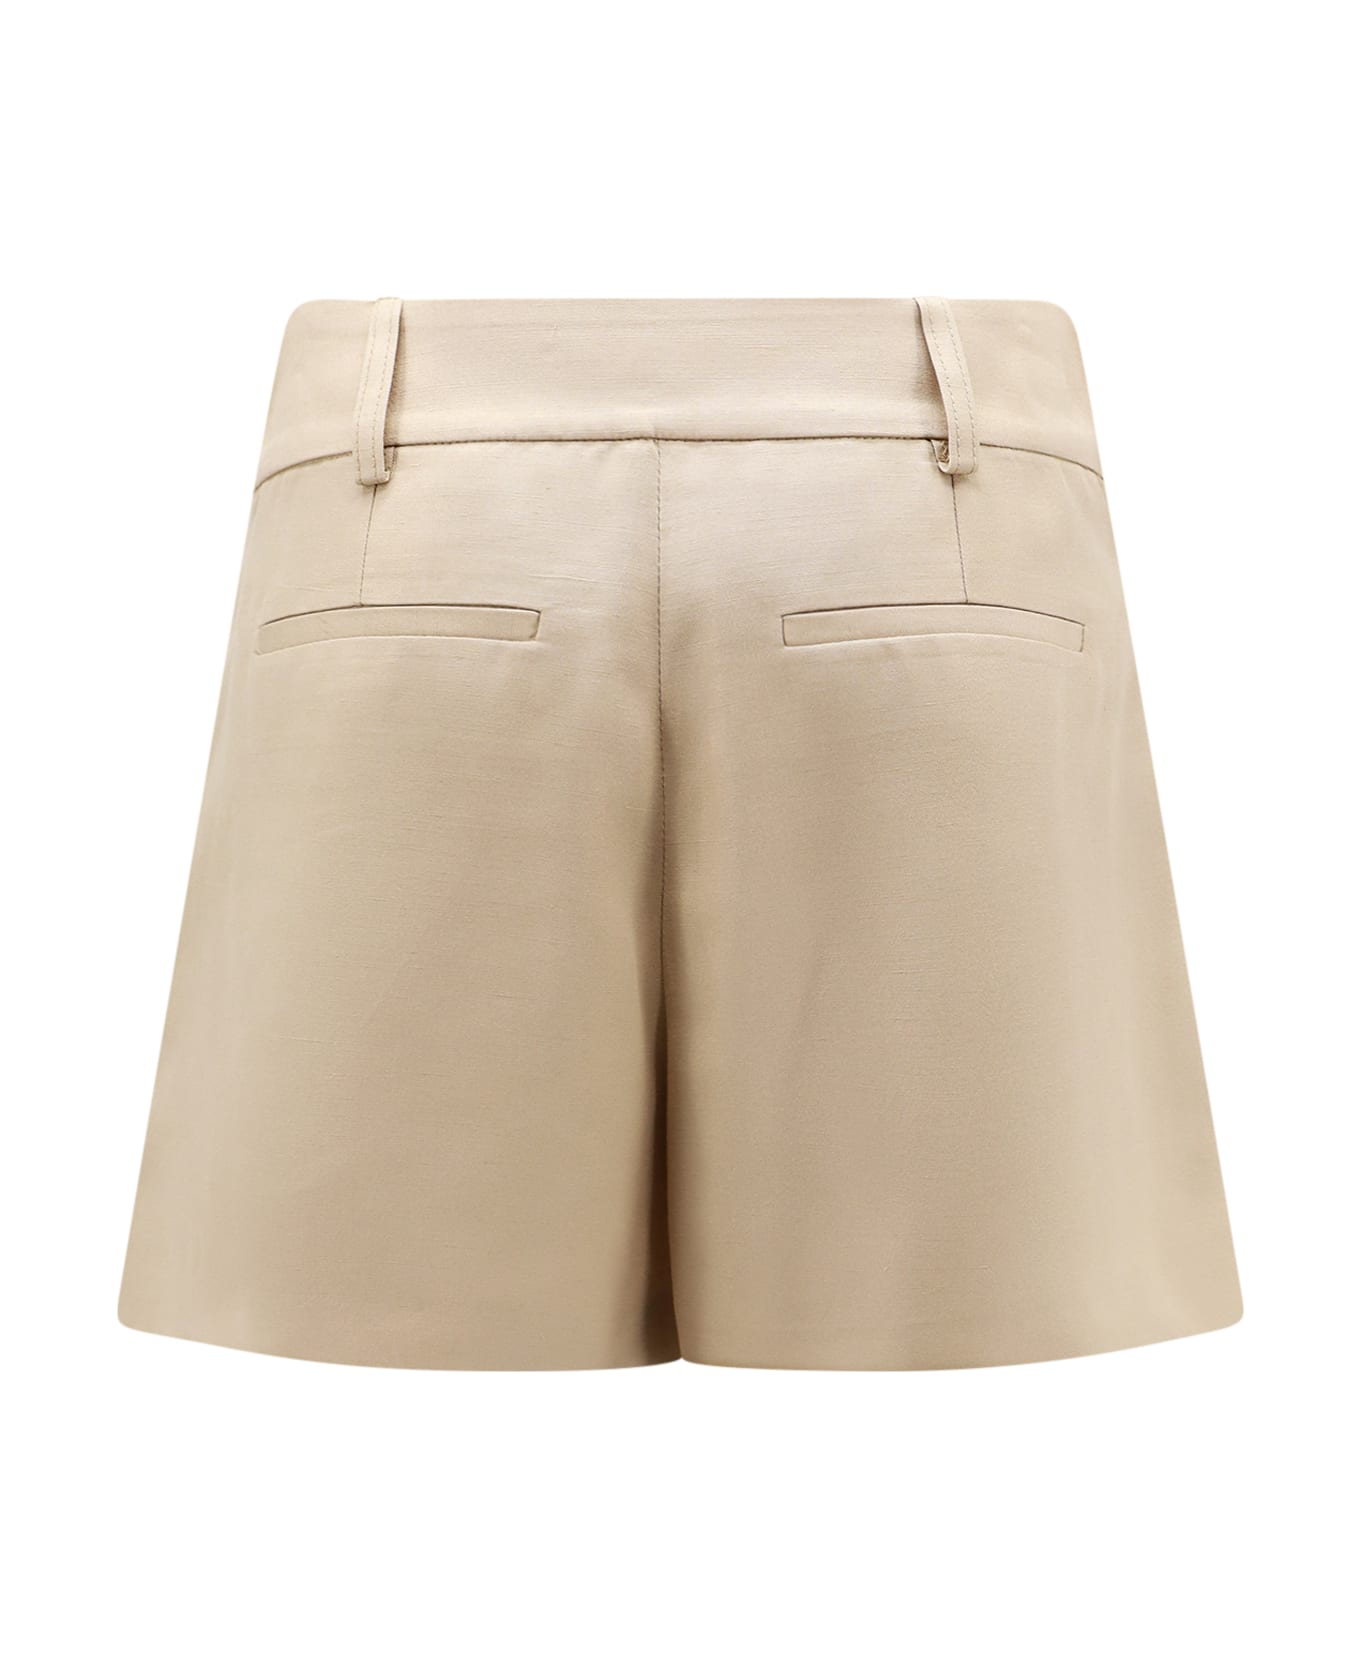 Stella McCartney Tailored Shorts - Beige ショートパンツ